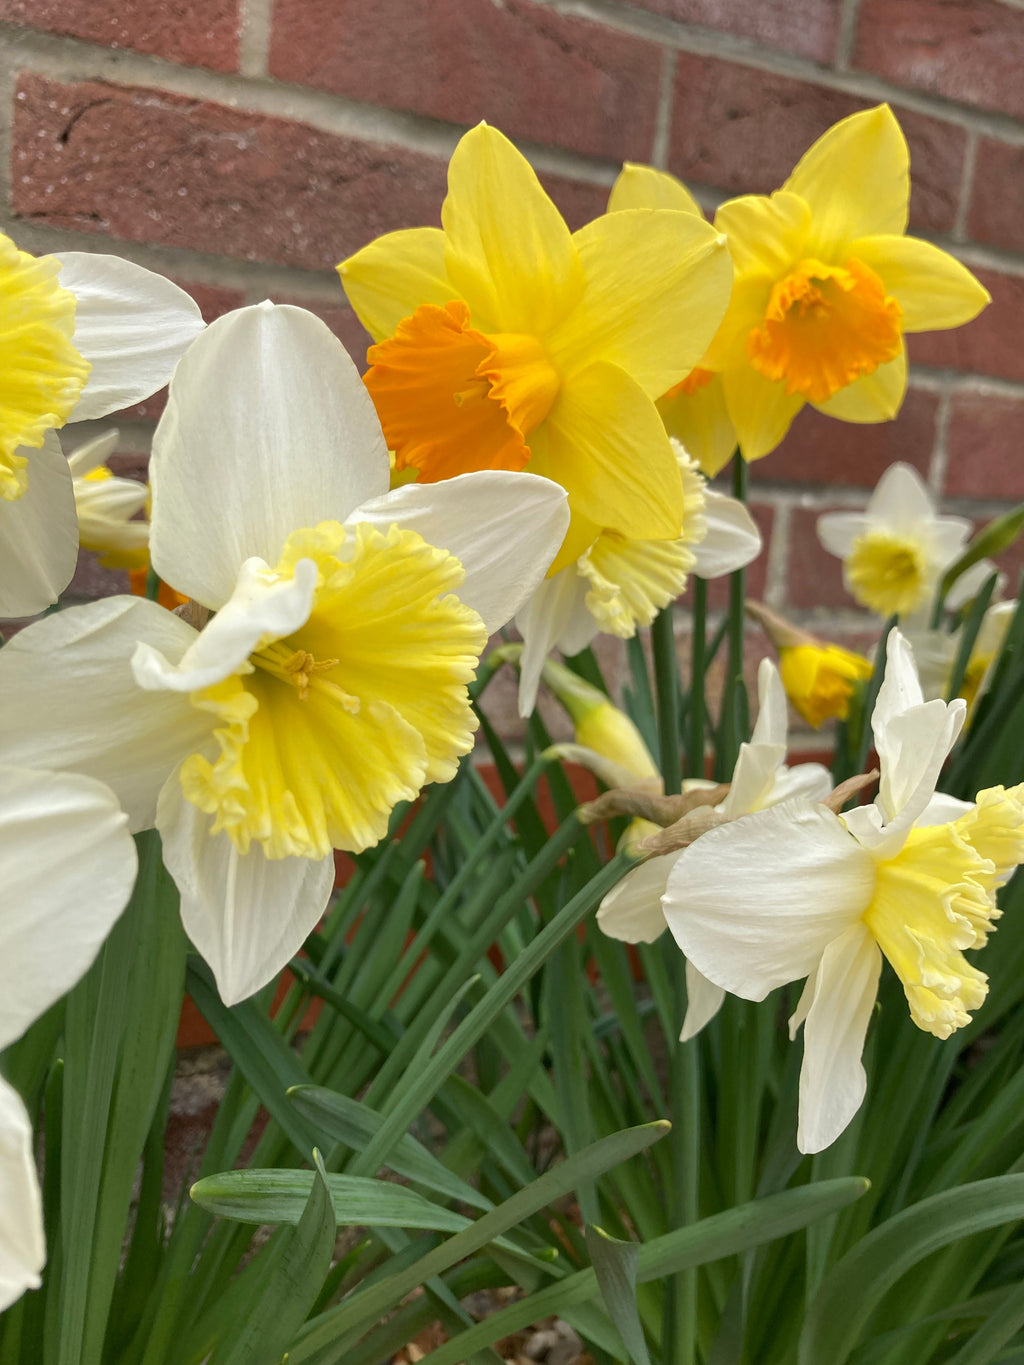 Sack of Daffodil Bulbs - 25 kg (Mixed Varieties) Free UK Postage